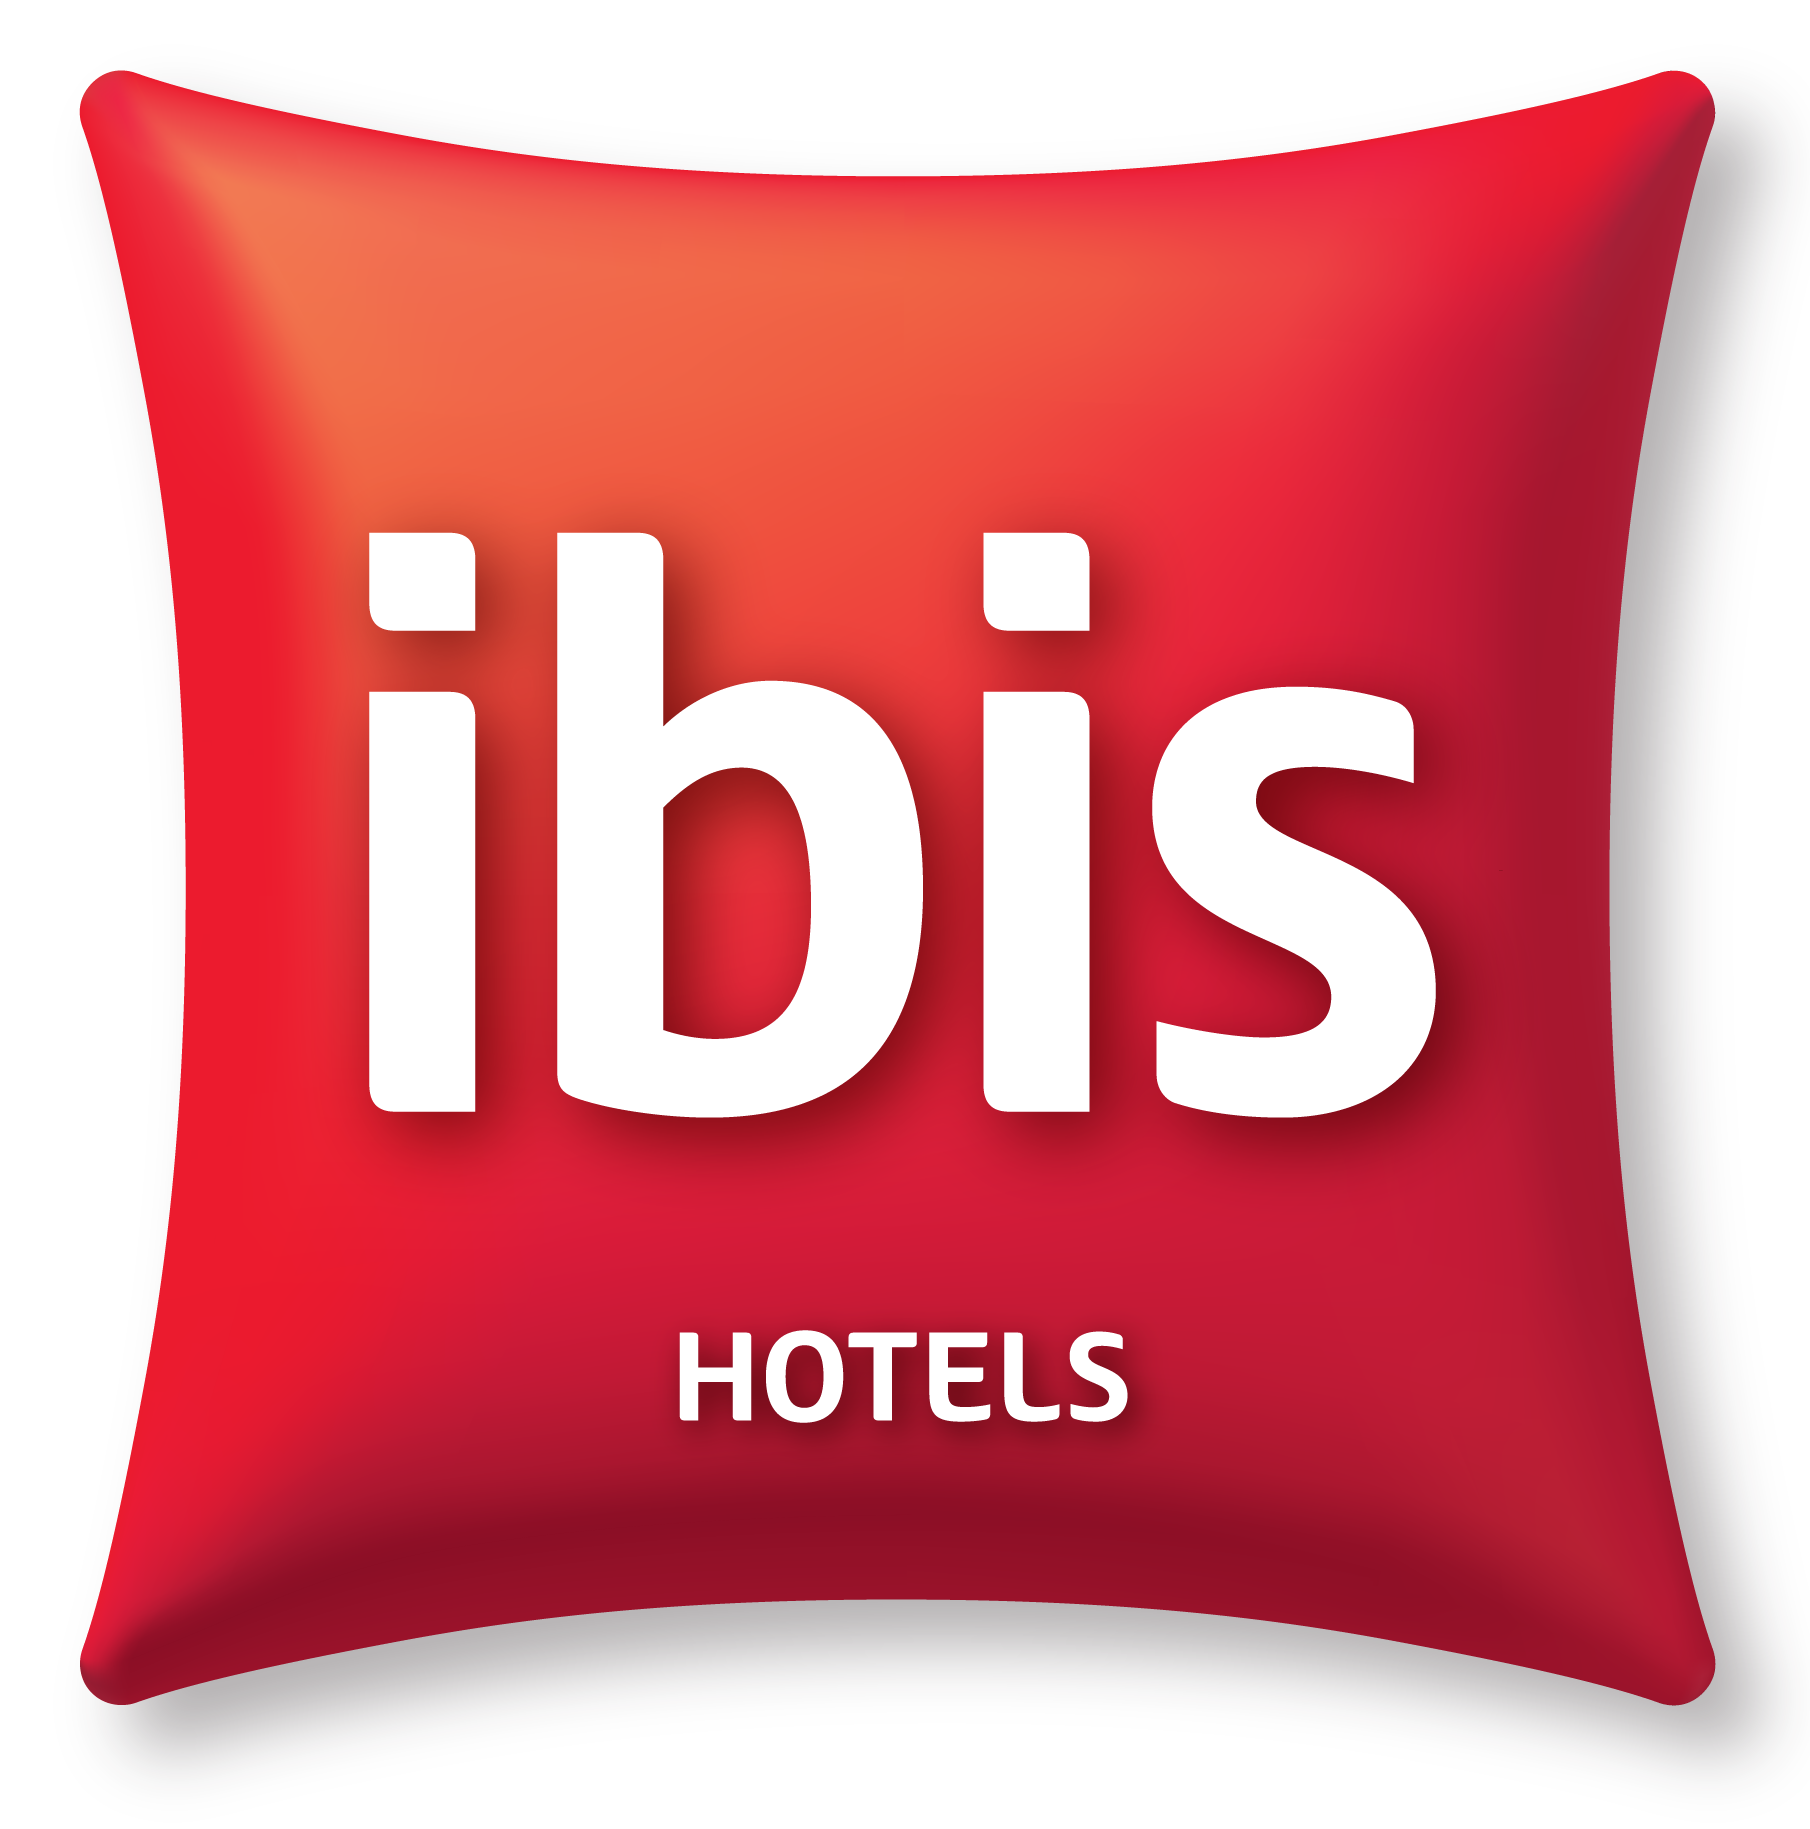 Отель IBIS, Астана, Казахстан